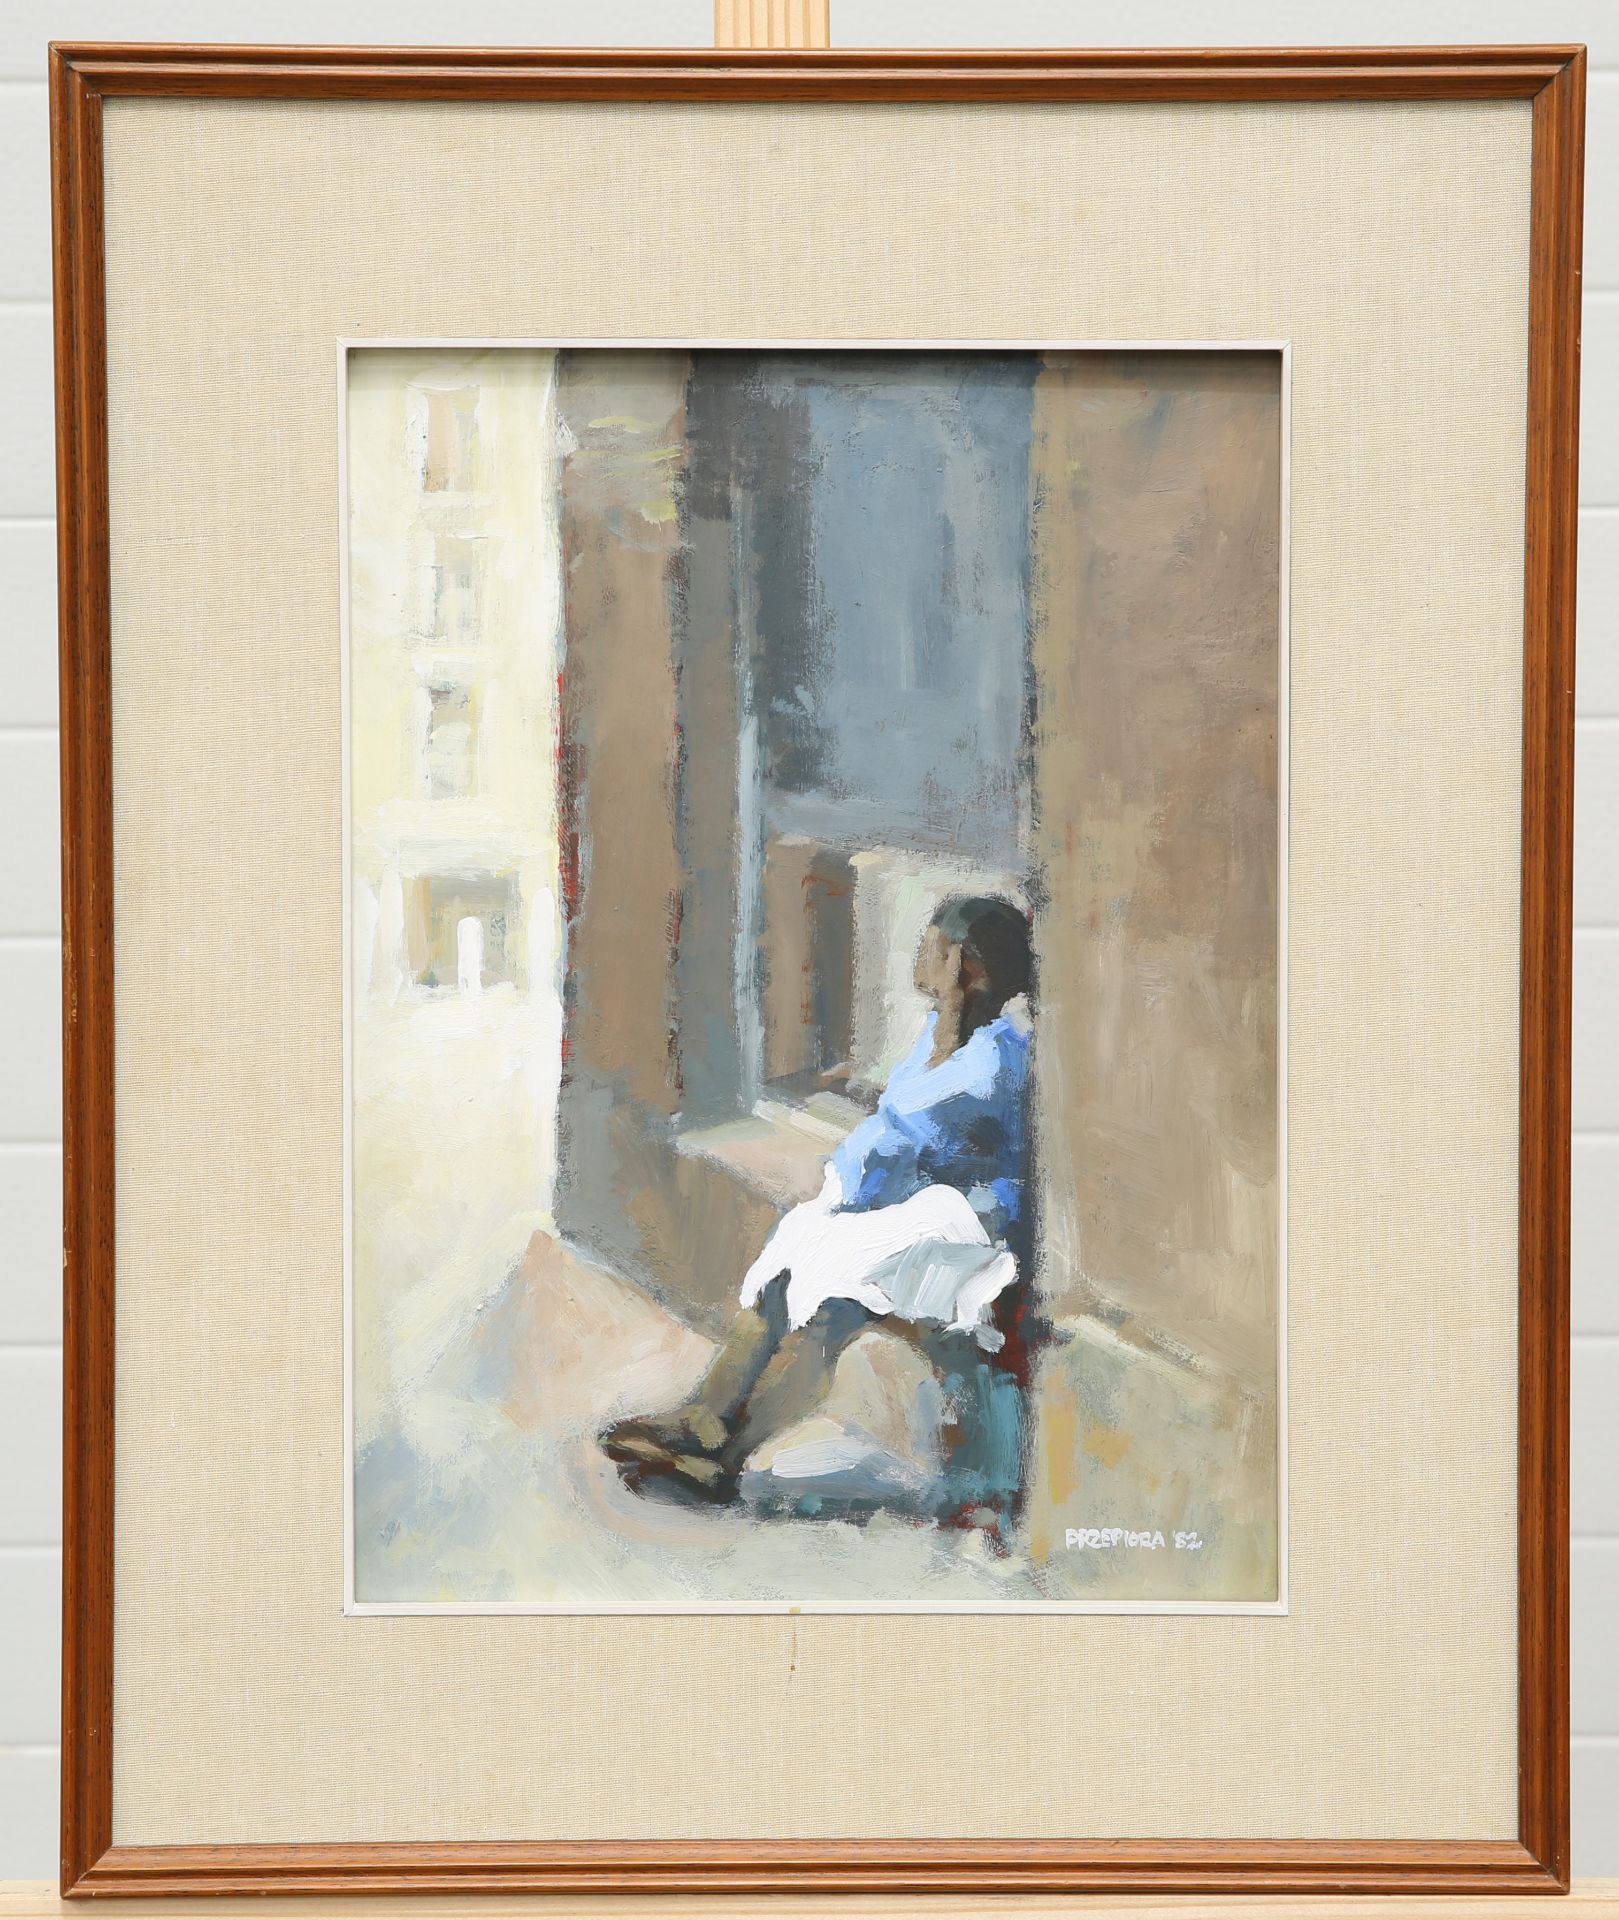 DAVID STEFAN PRZEPIORA (POLISH, BORN 1944), GIRL SITTING IN A DOORWAY